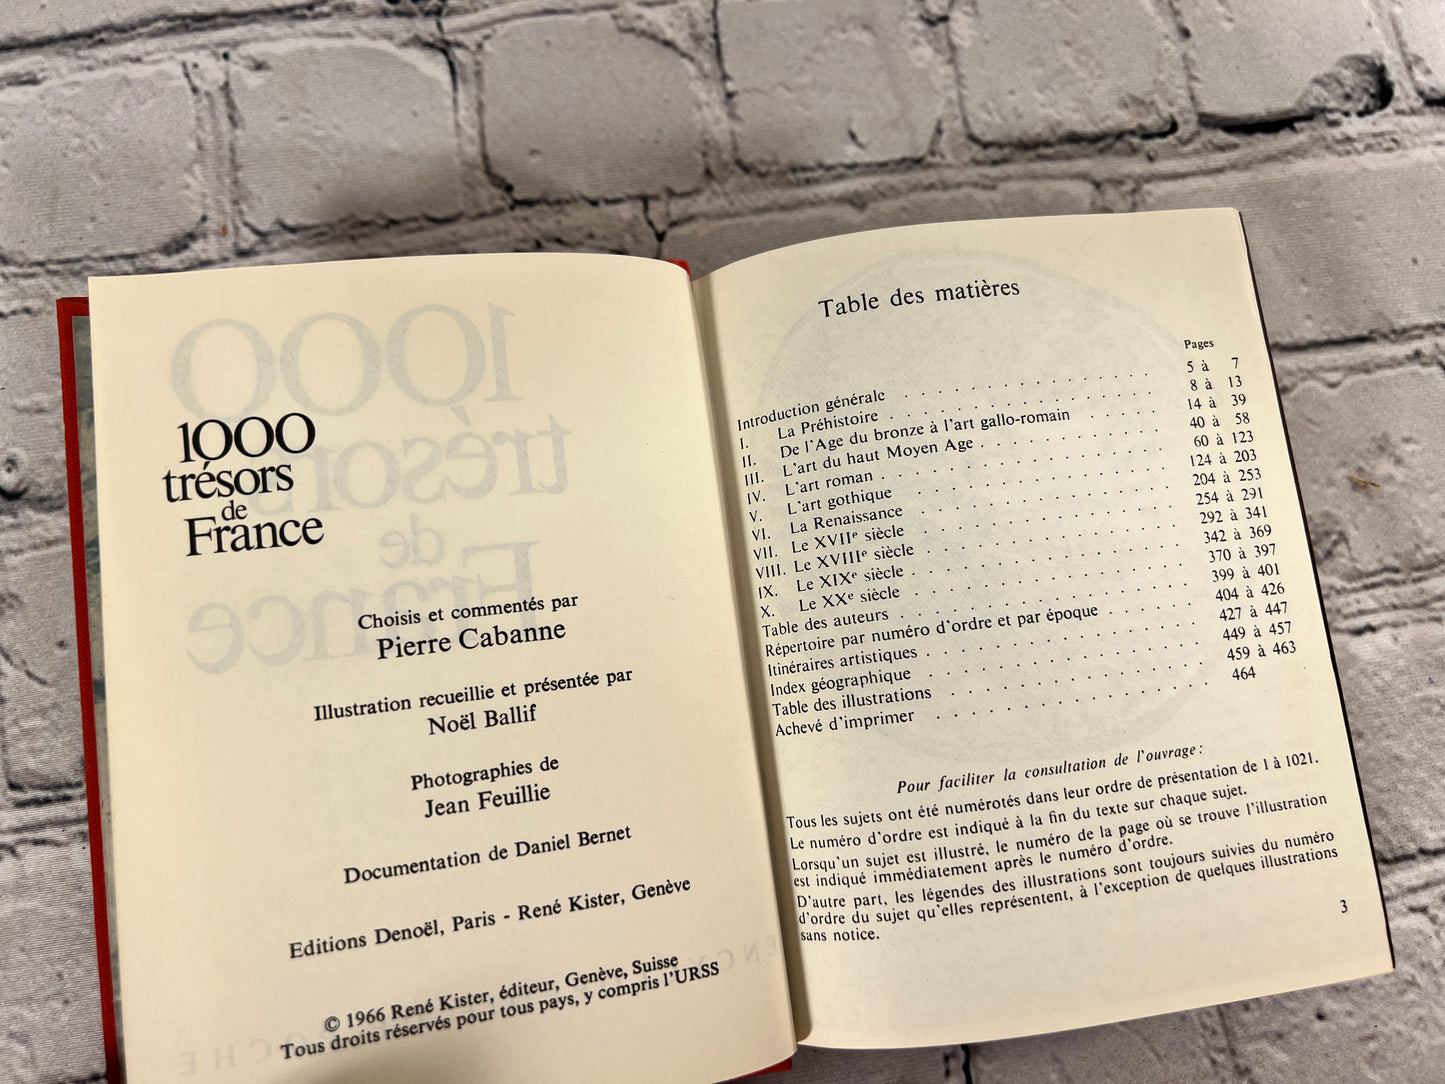 1000 Tresors de France (Treasures of) Encyclopedia de Poche [1966]